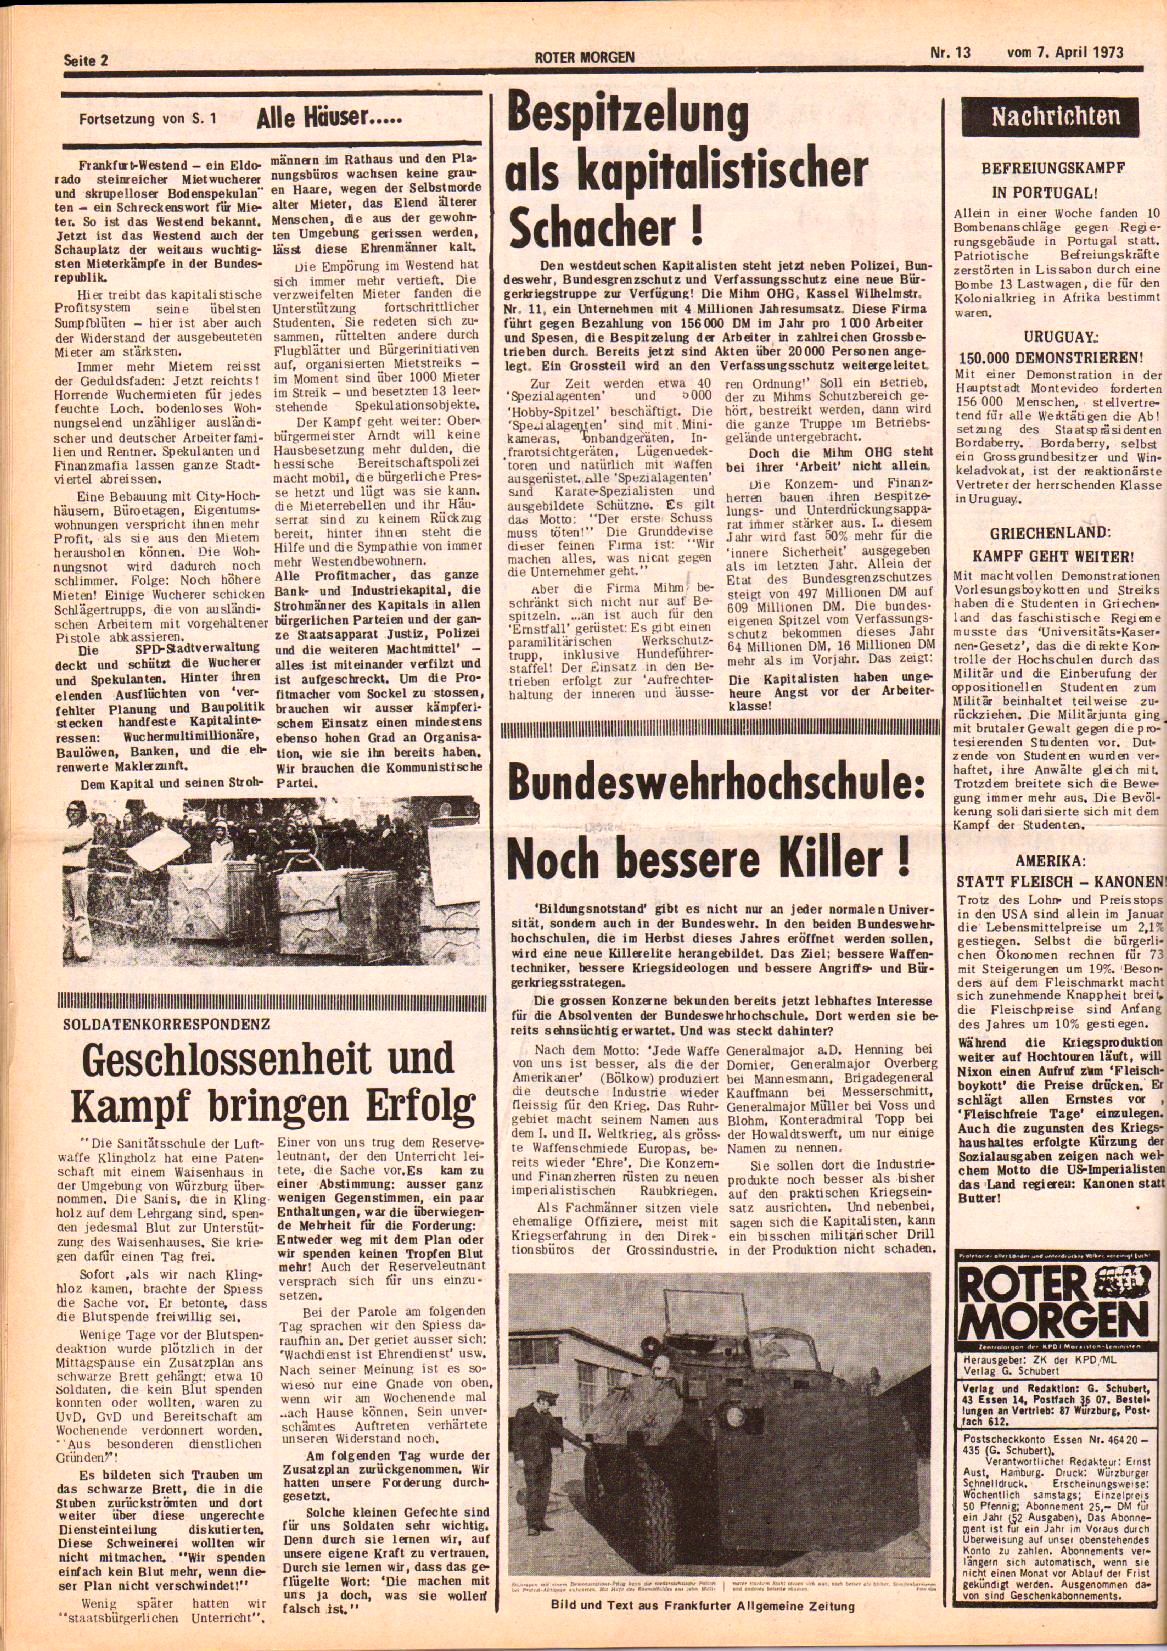 Roter Morgen, 7. Jg., 7. April 1973, Nr. 13, Seite 2